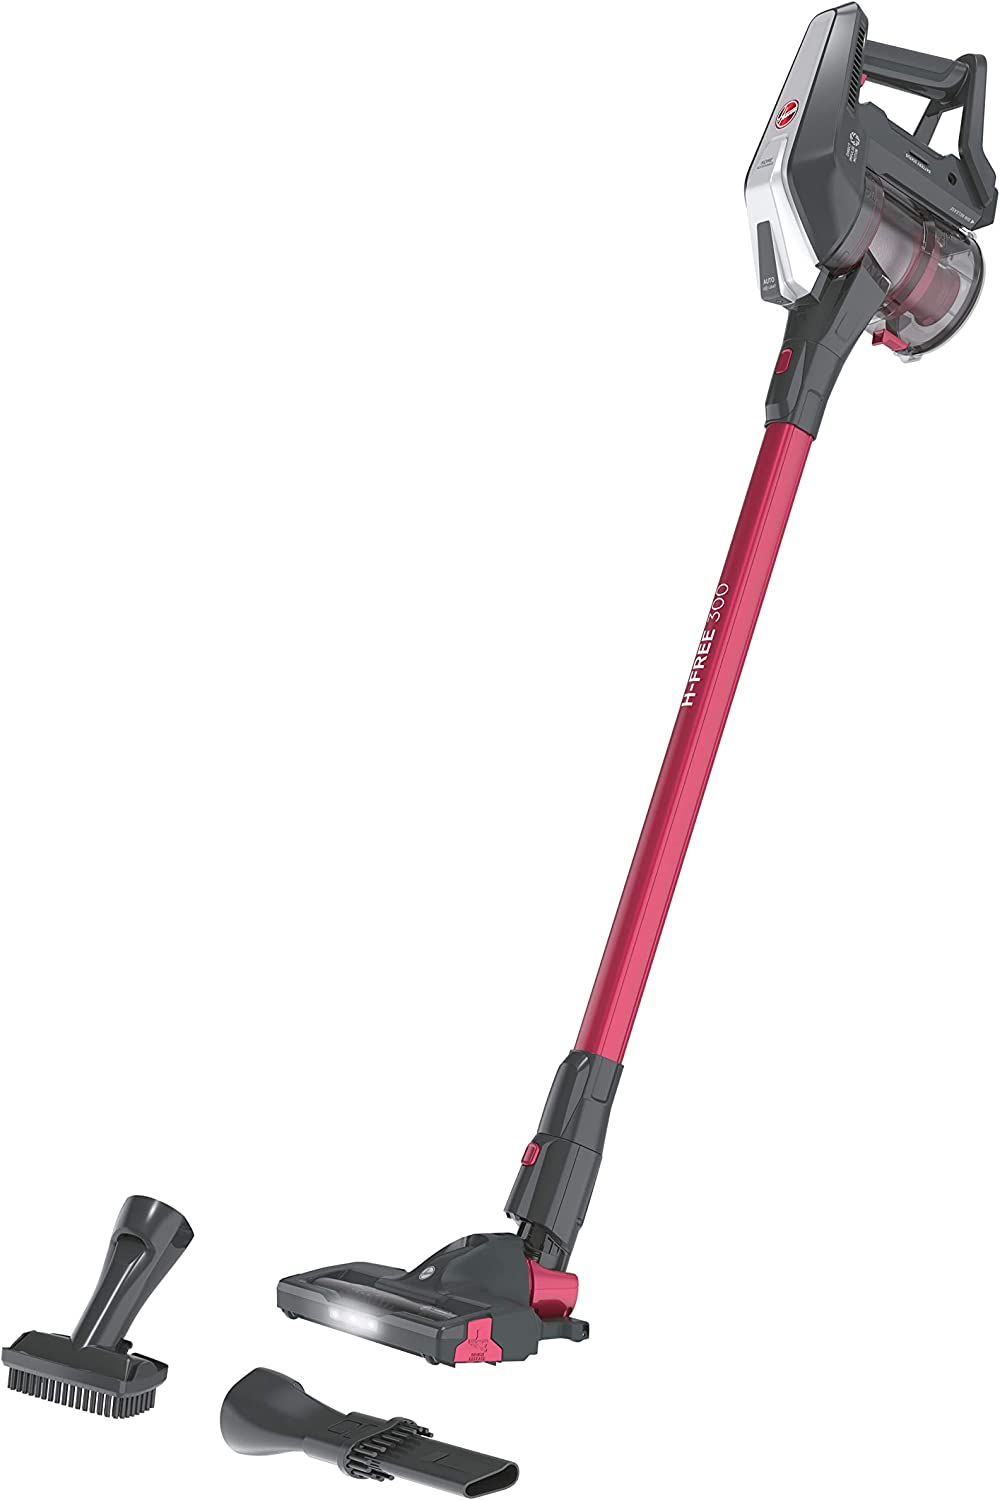 Hoover 300 3in1 Cordless Vacuum Cleaner, Agile